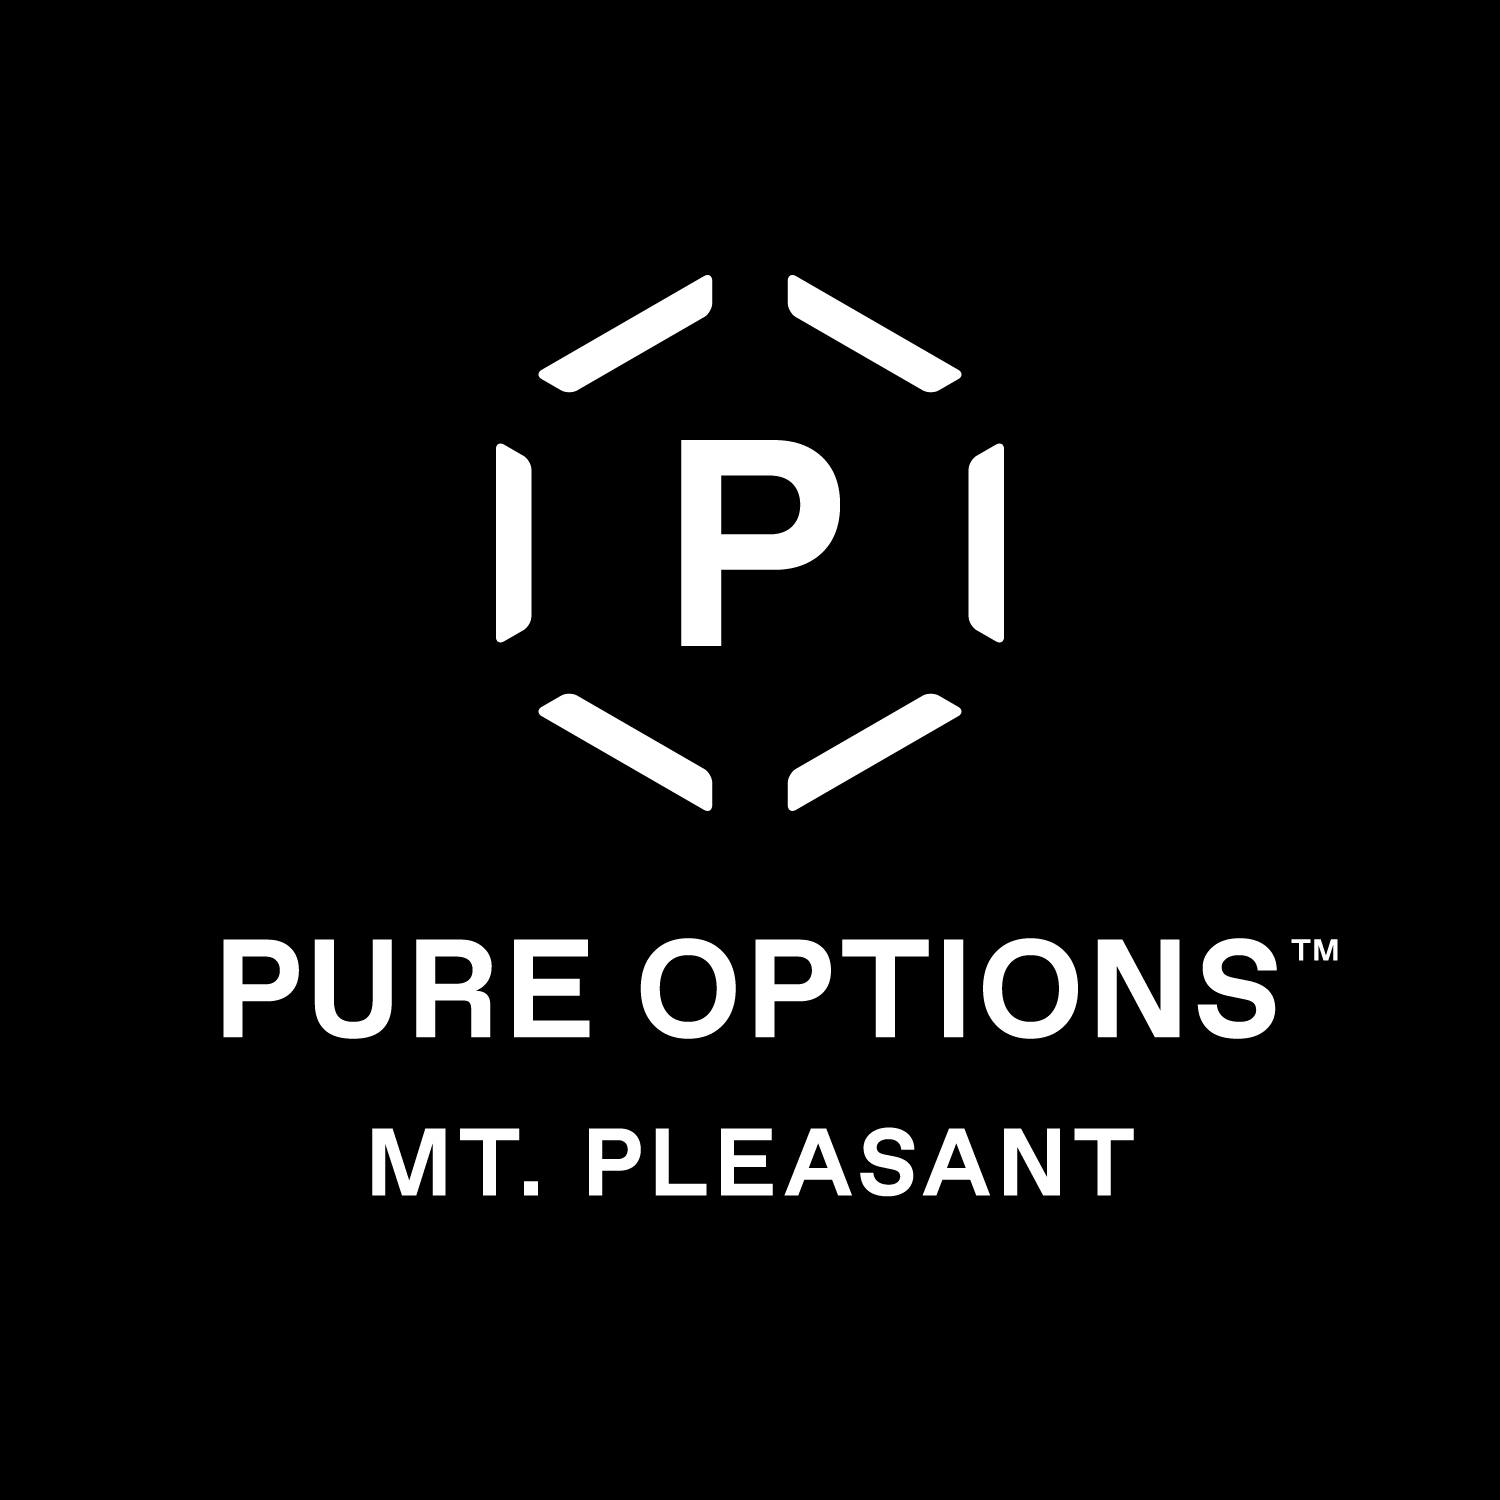 Pure Options Mt Pleasant